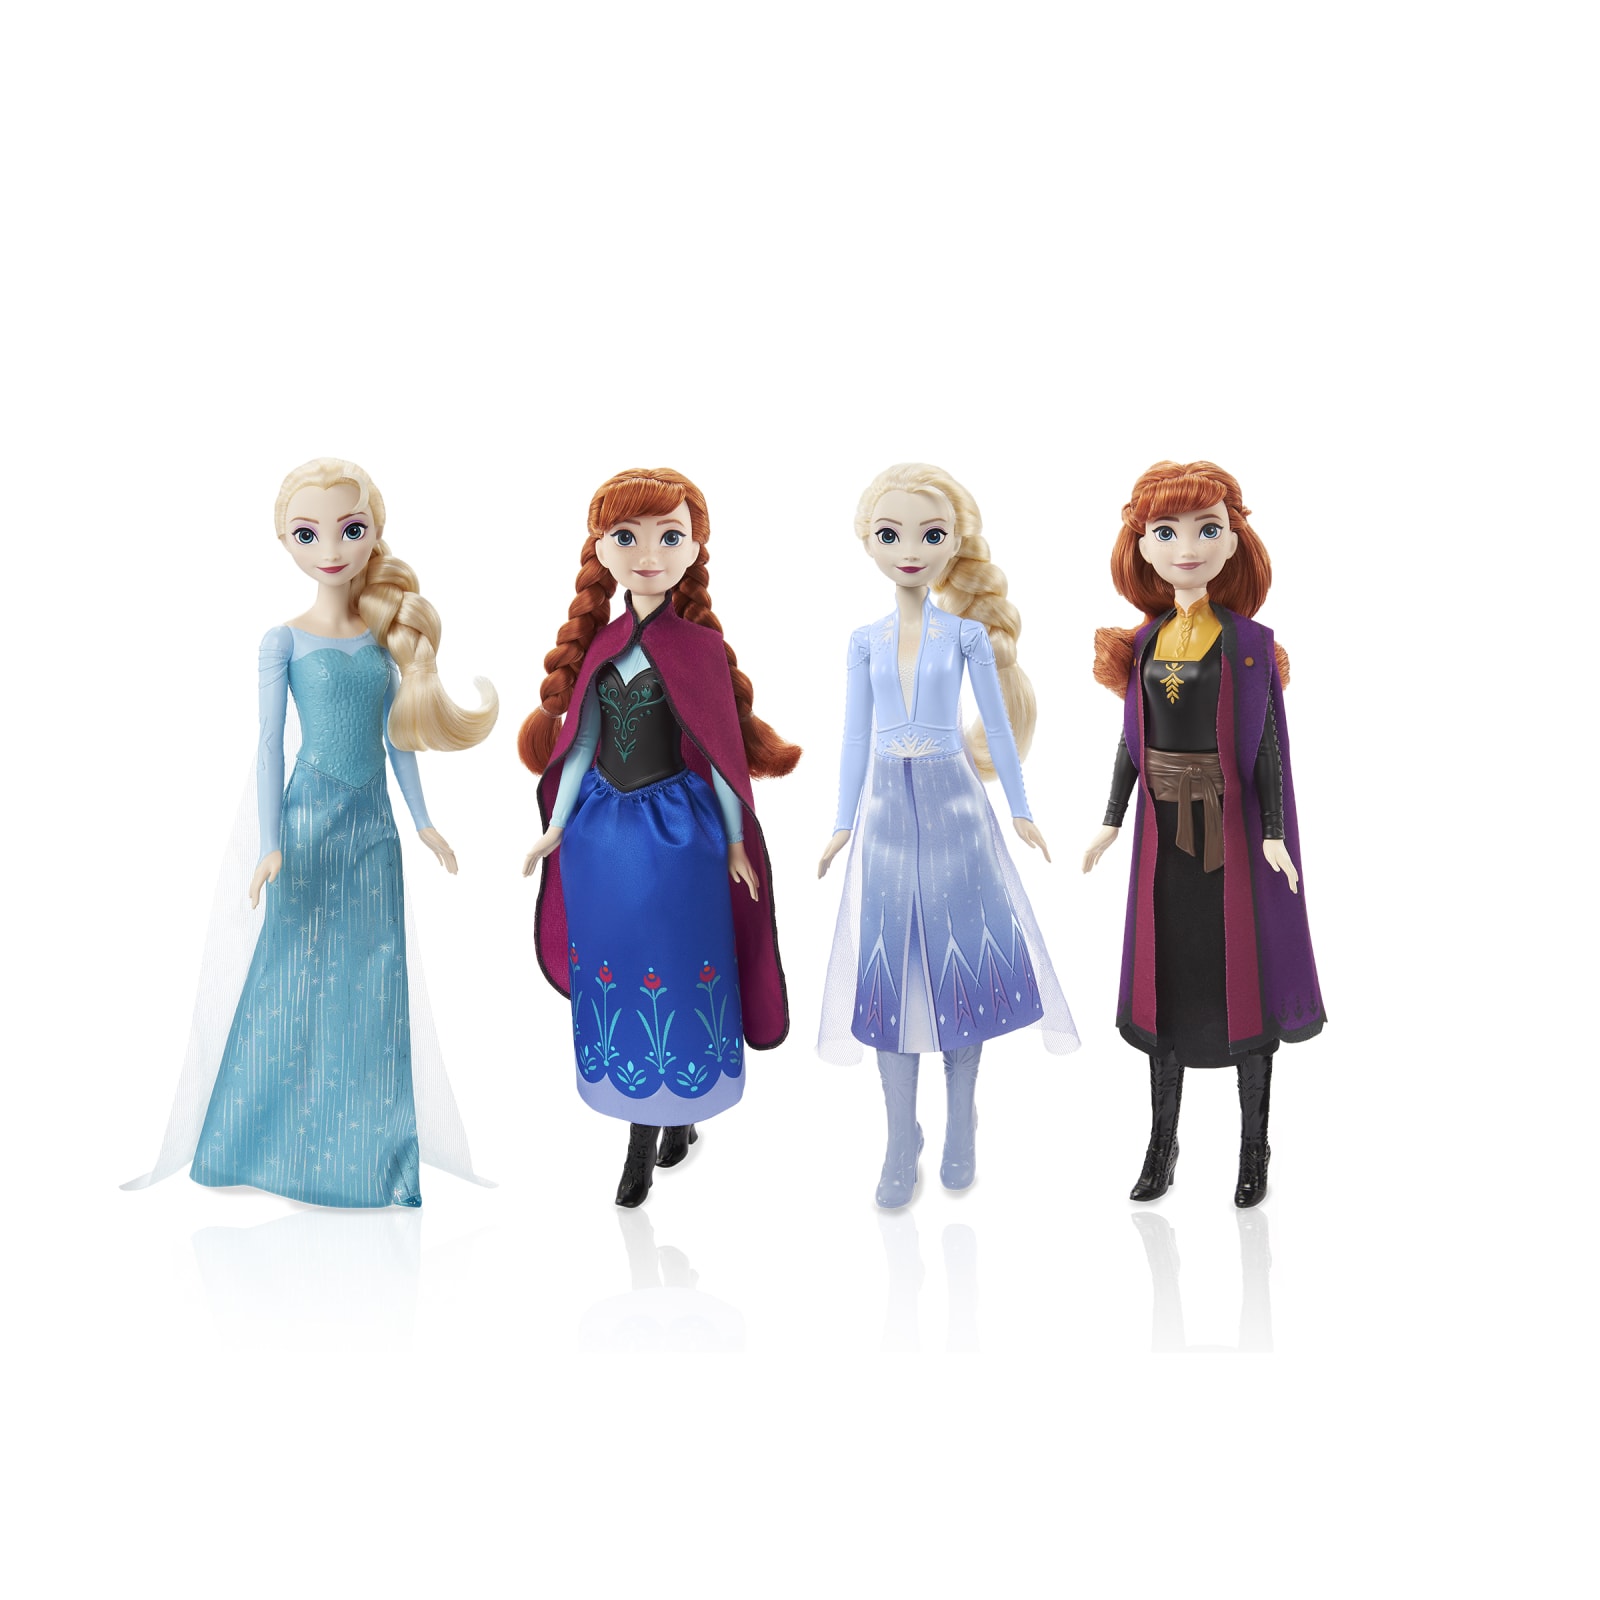 Frozen Fashion Doll - Assorted by Frozen at Fleet Farm